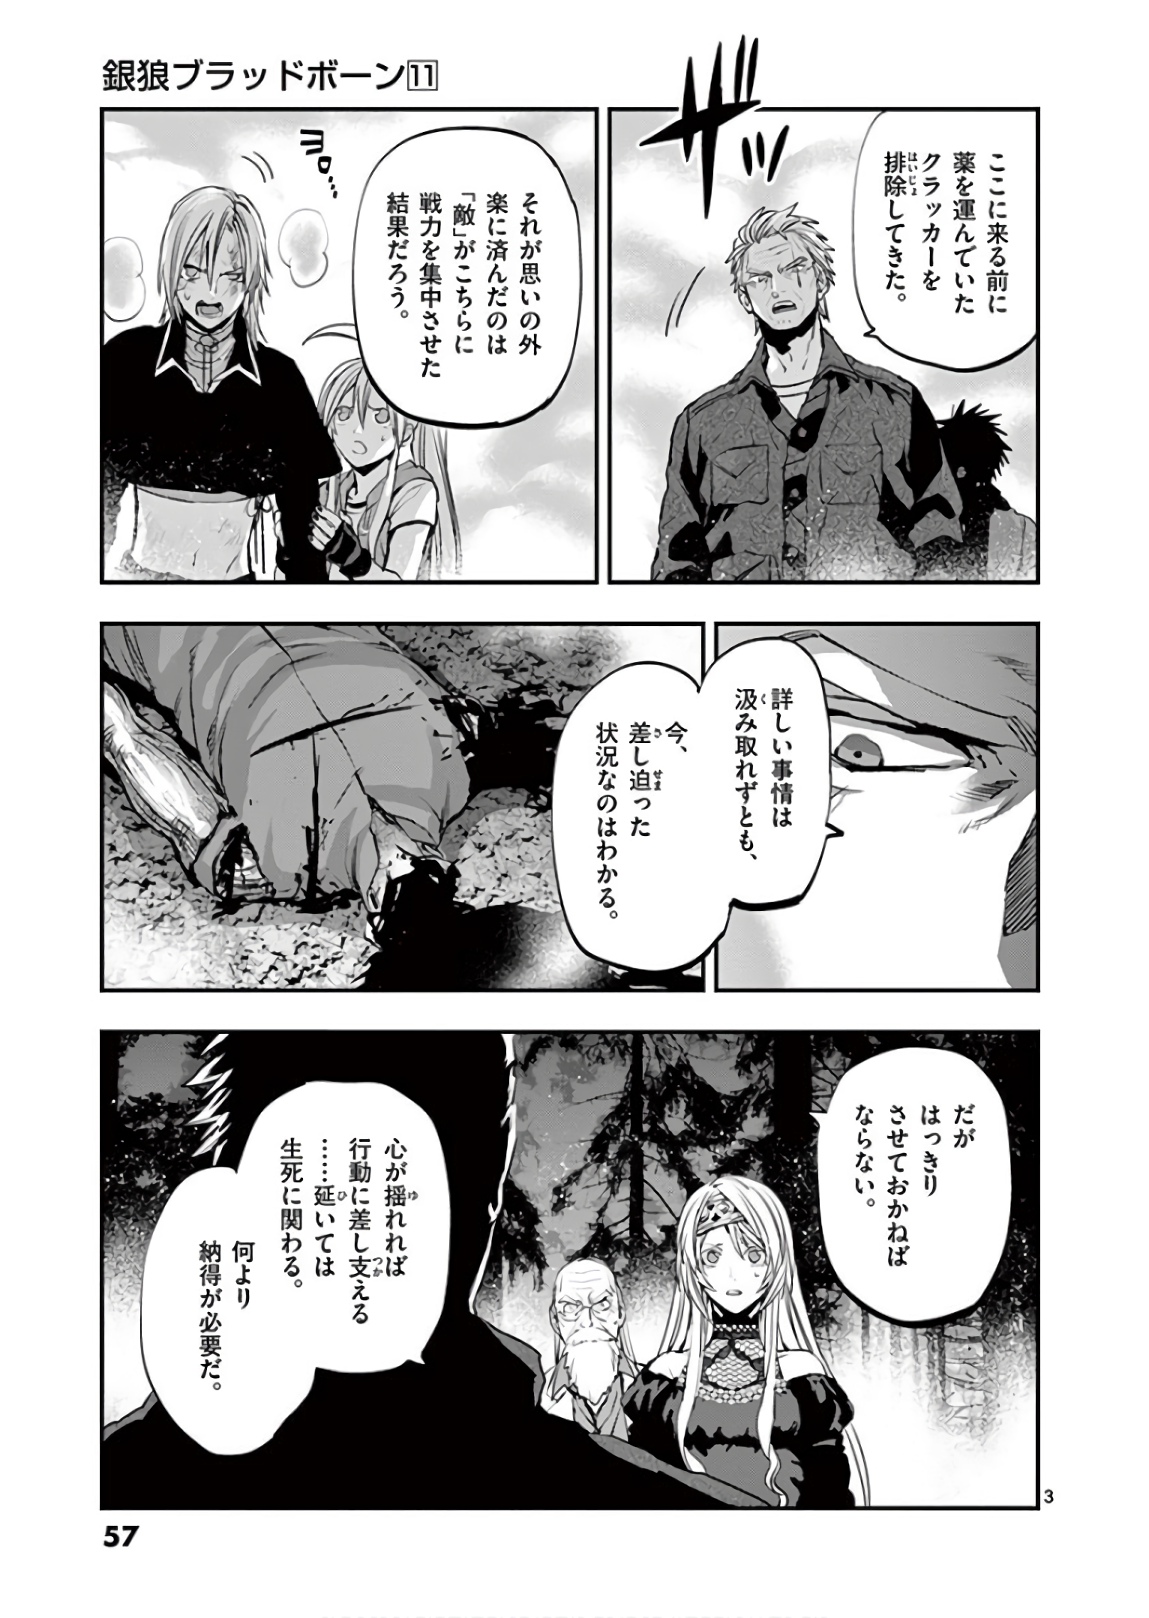 Ginrou Bloodborne - Chapter 90 - Page 3